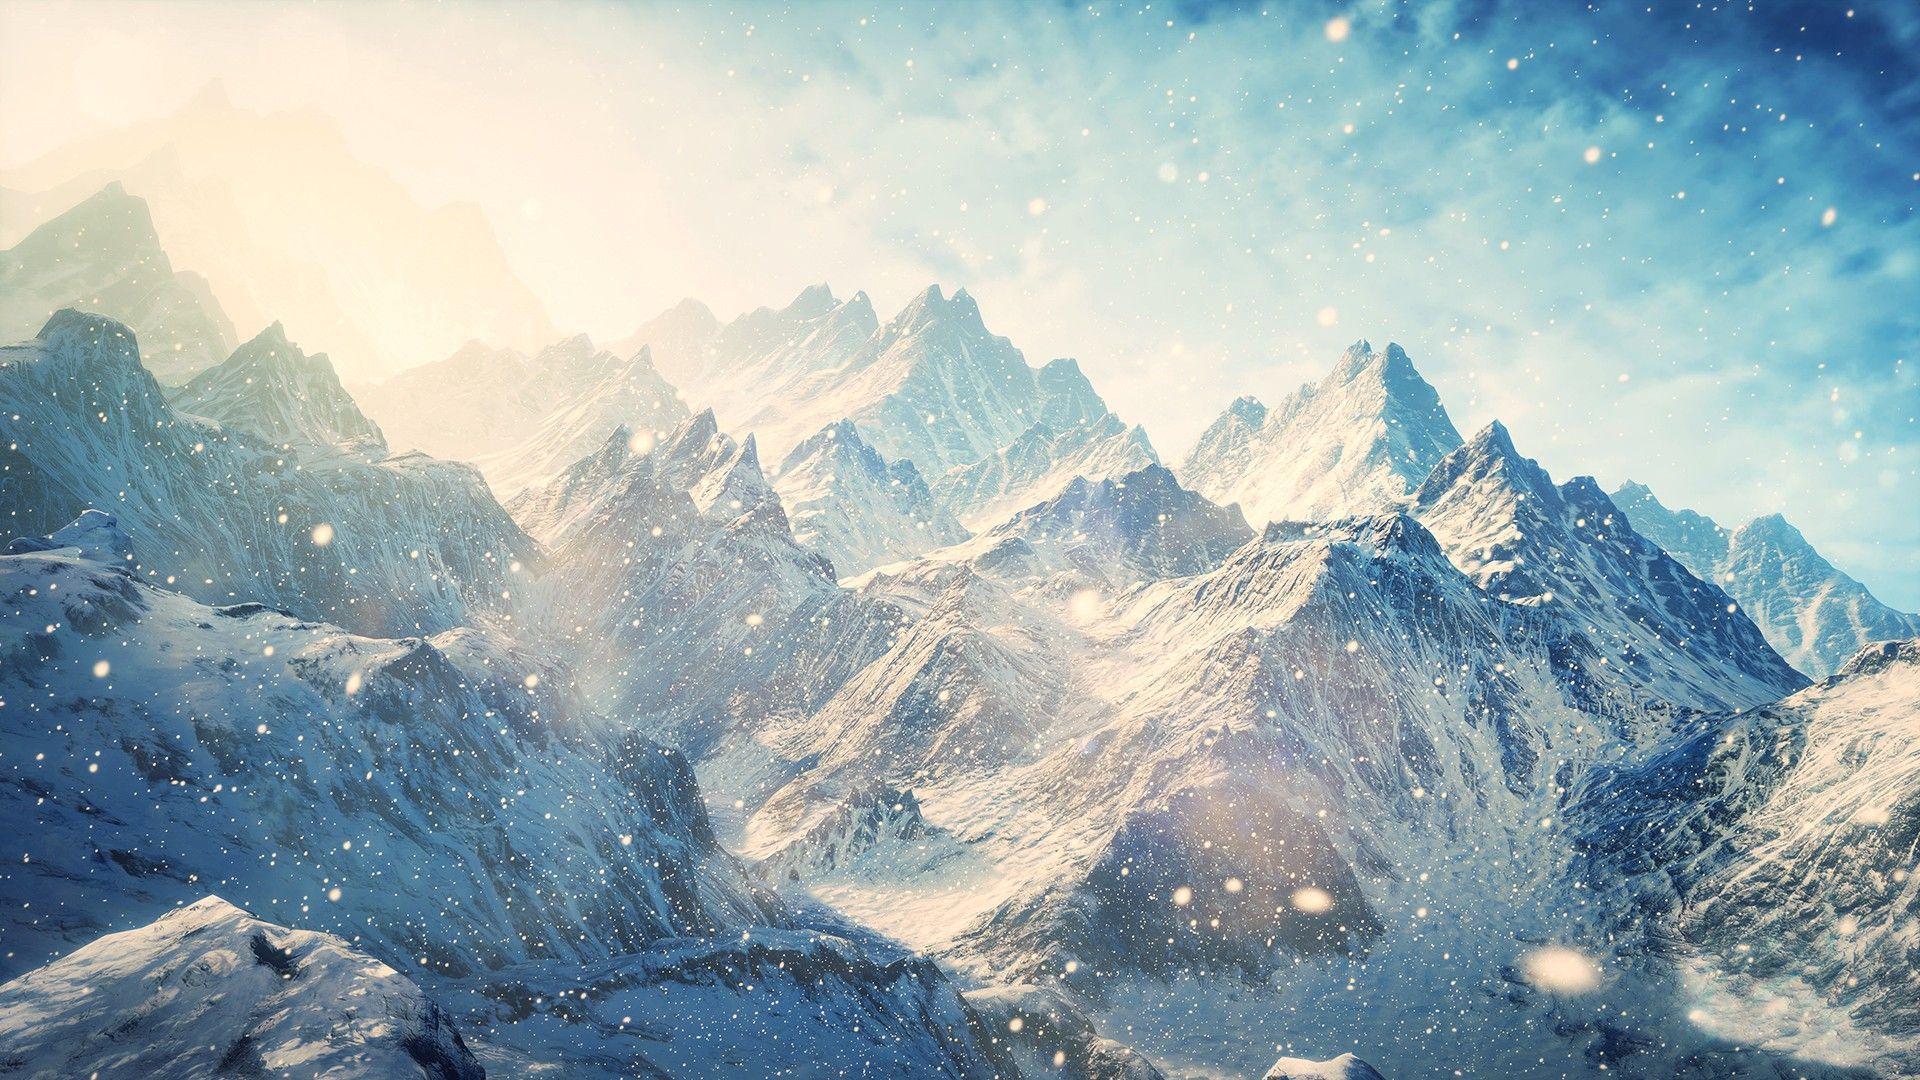 Snow Mountain desktop wallpaper. Art. Snowy